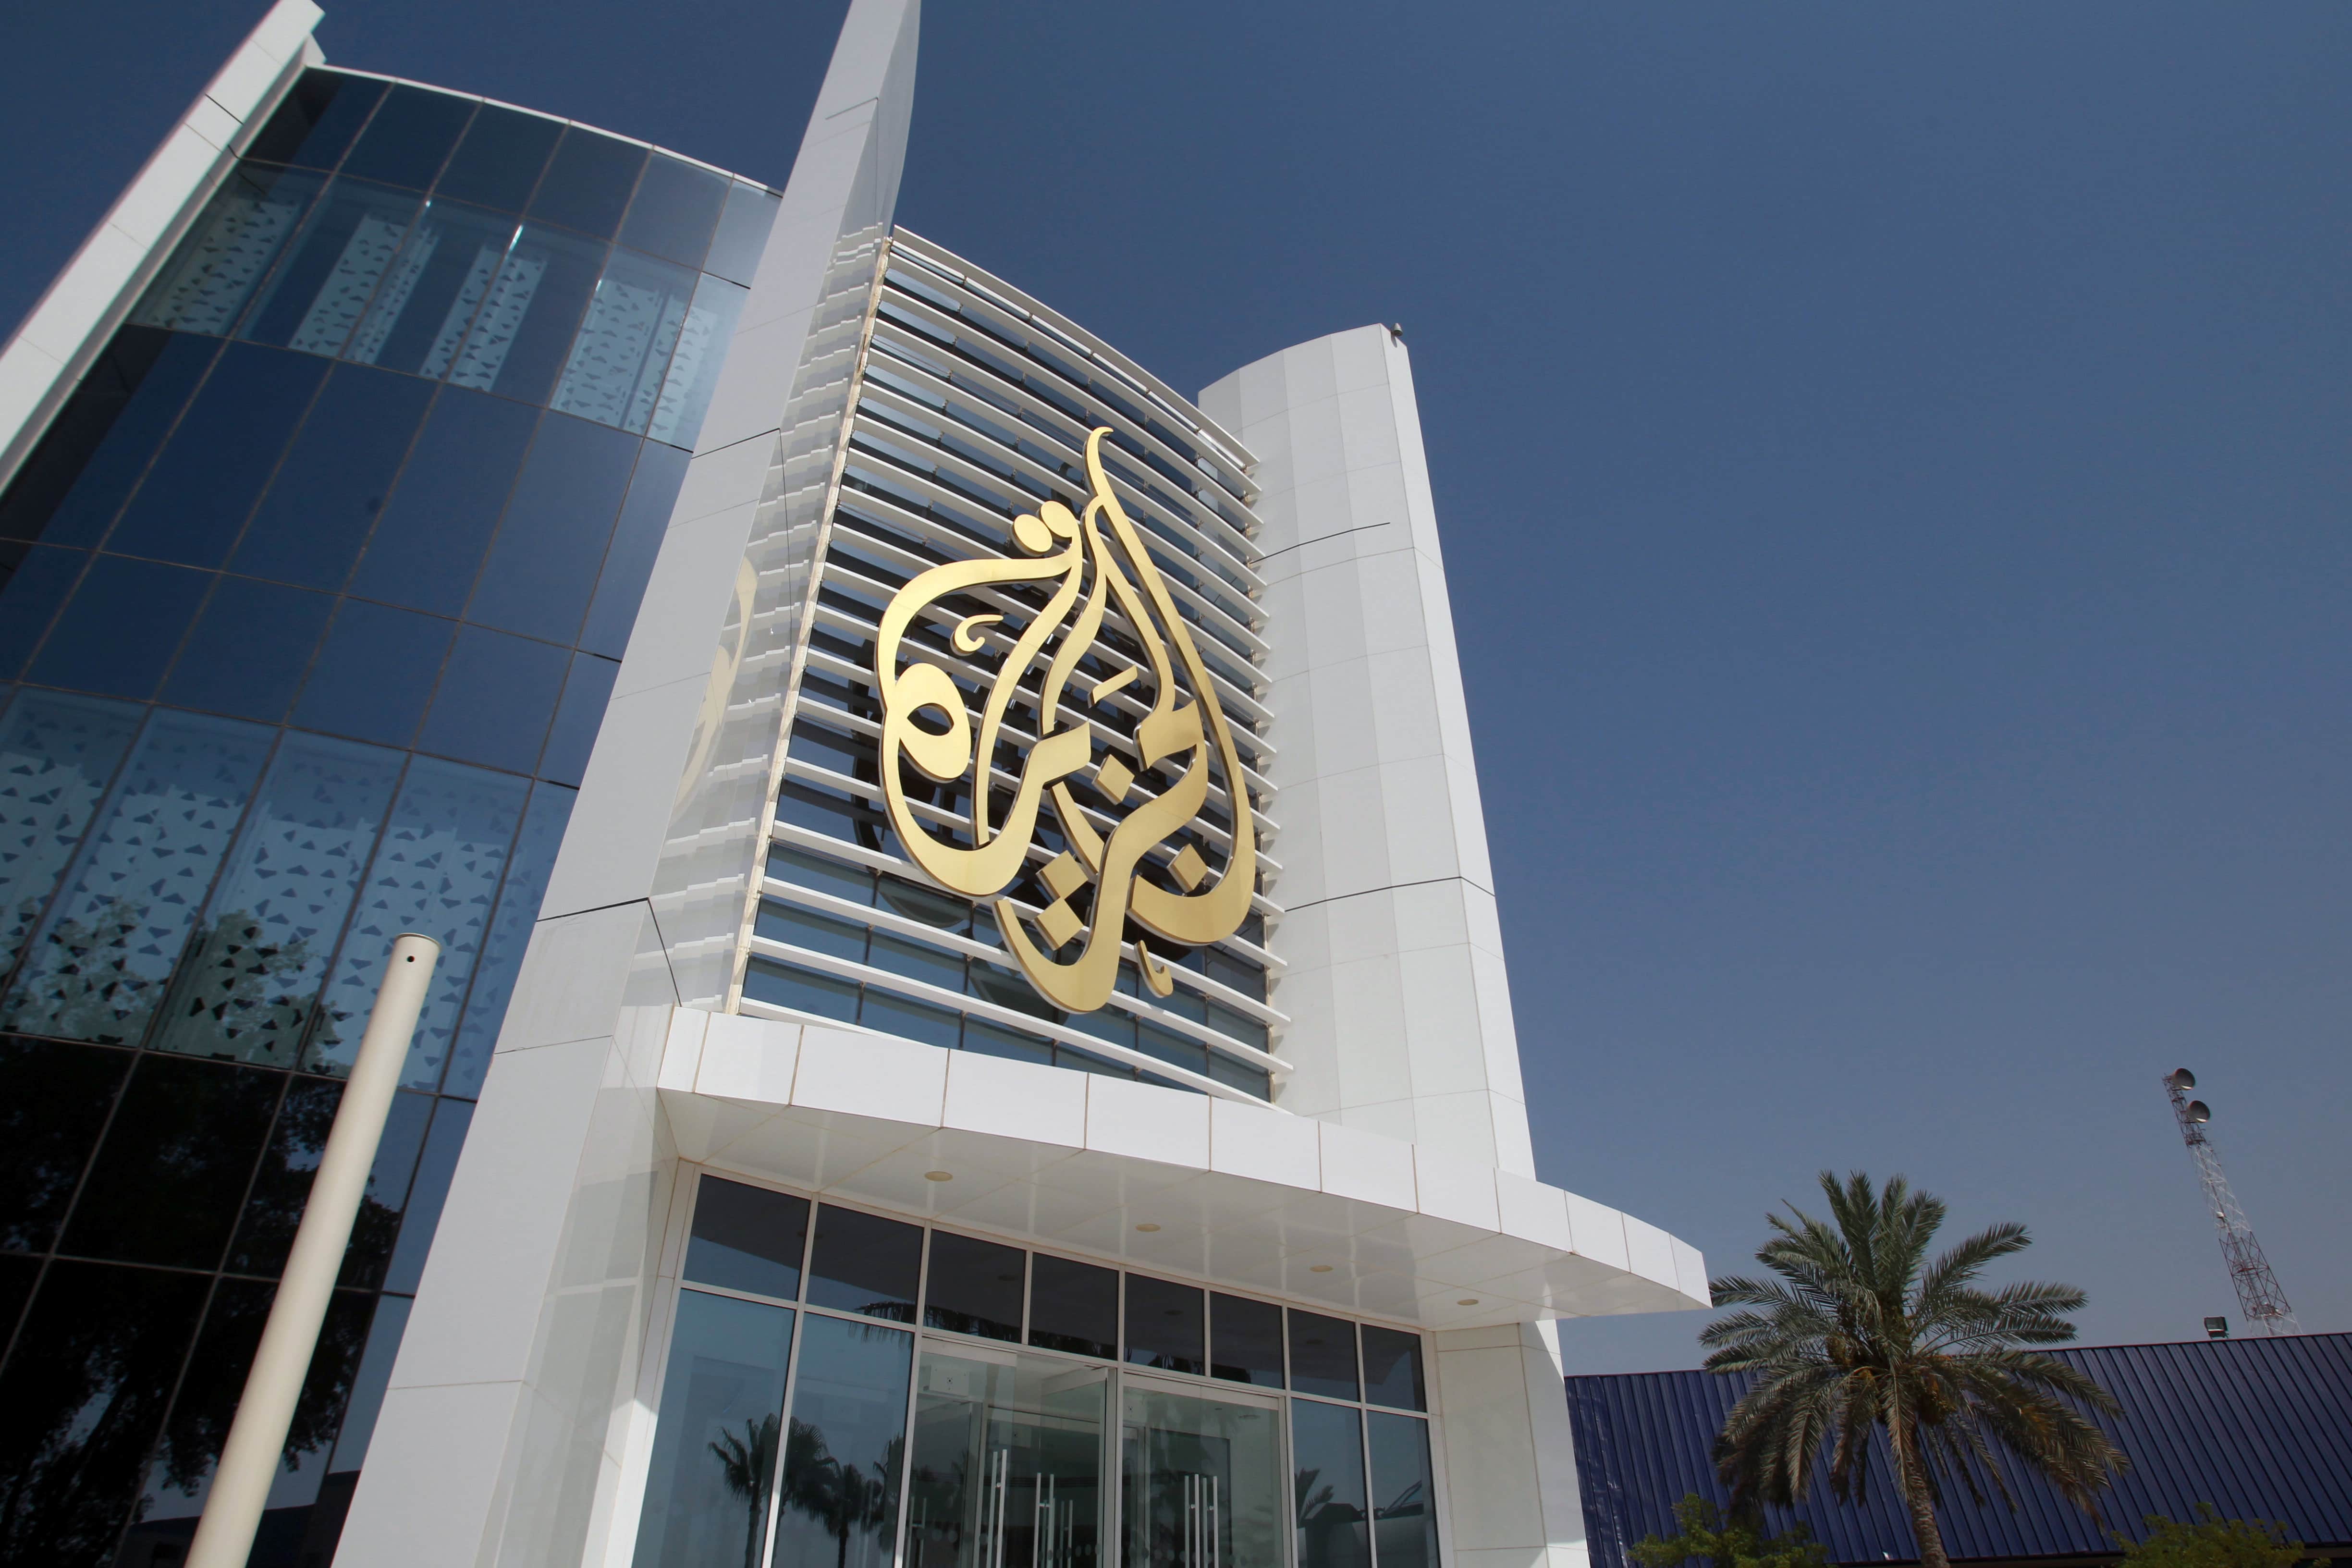 The Al Jazeera Media Network logo is seen on its headquarters building in Doha, Qatar, 8 June 2017, REUTERS/Naseem Zeitoon